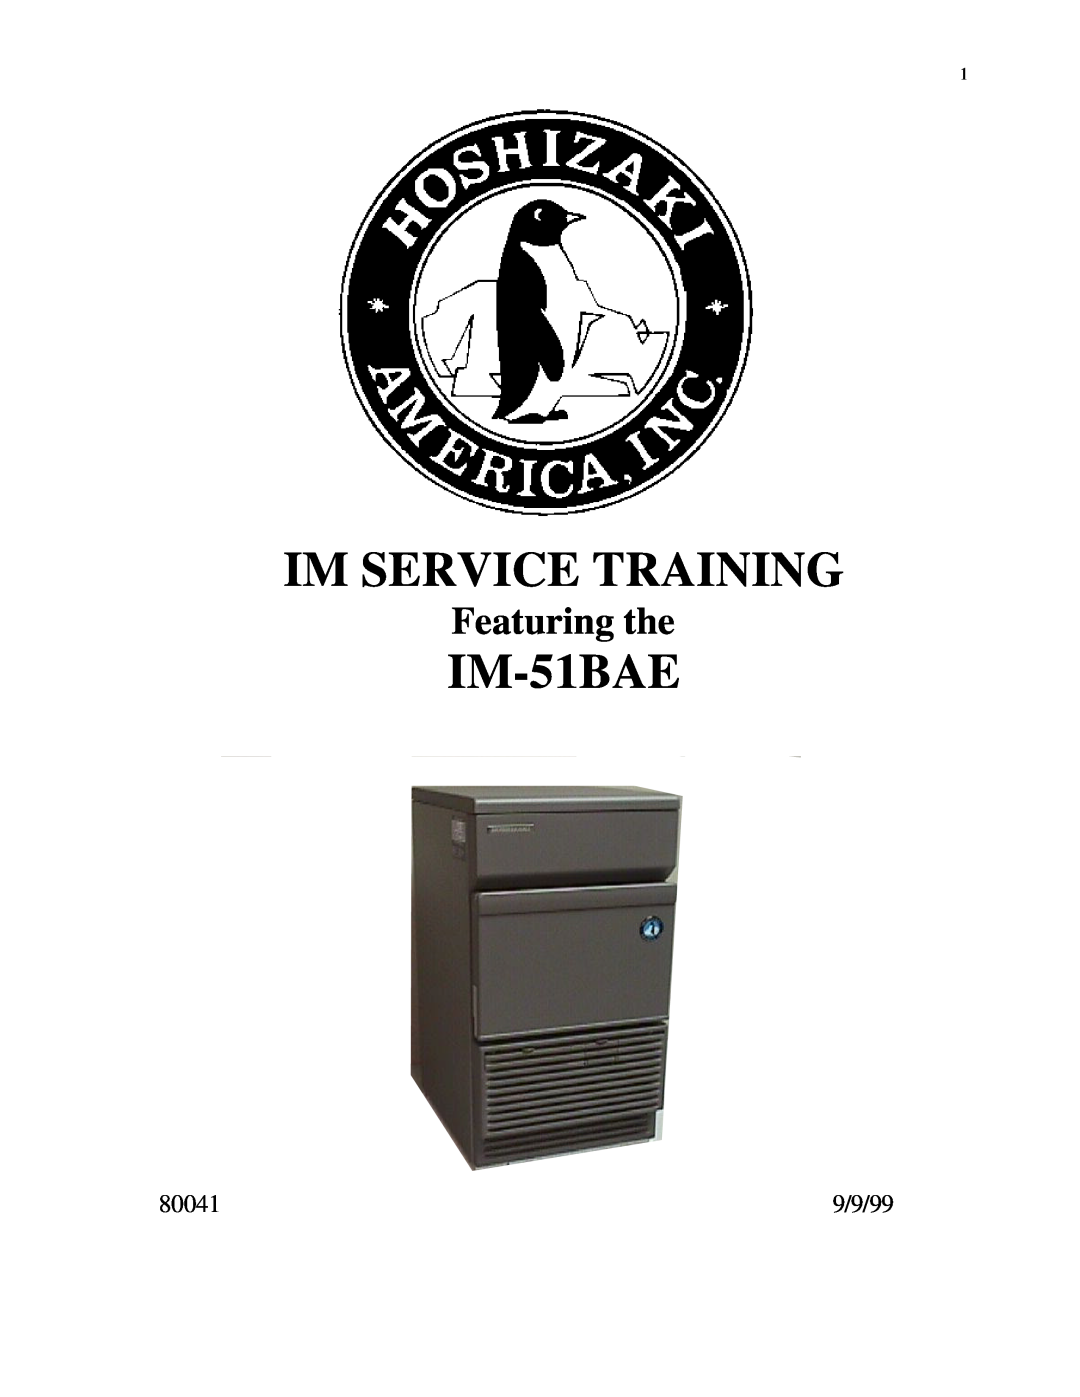 Hoshizaki IM-51BAE manual Im Service Training, Featuring the 